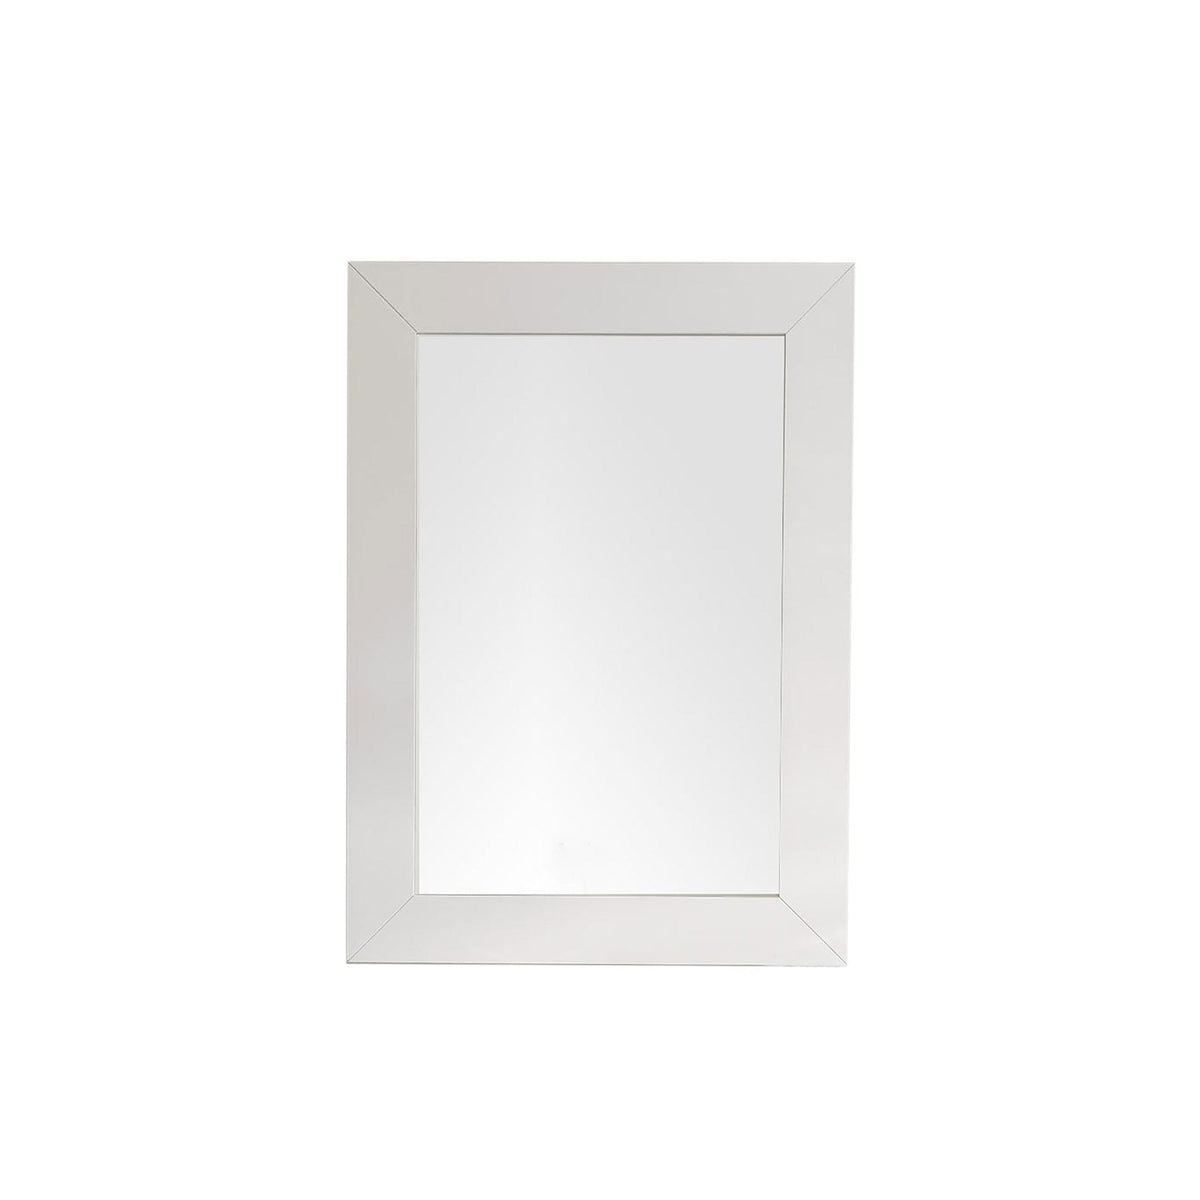 29" Weston Rectangular Mirror, Bright White